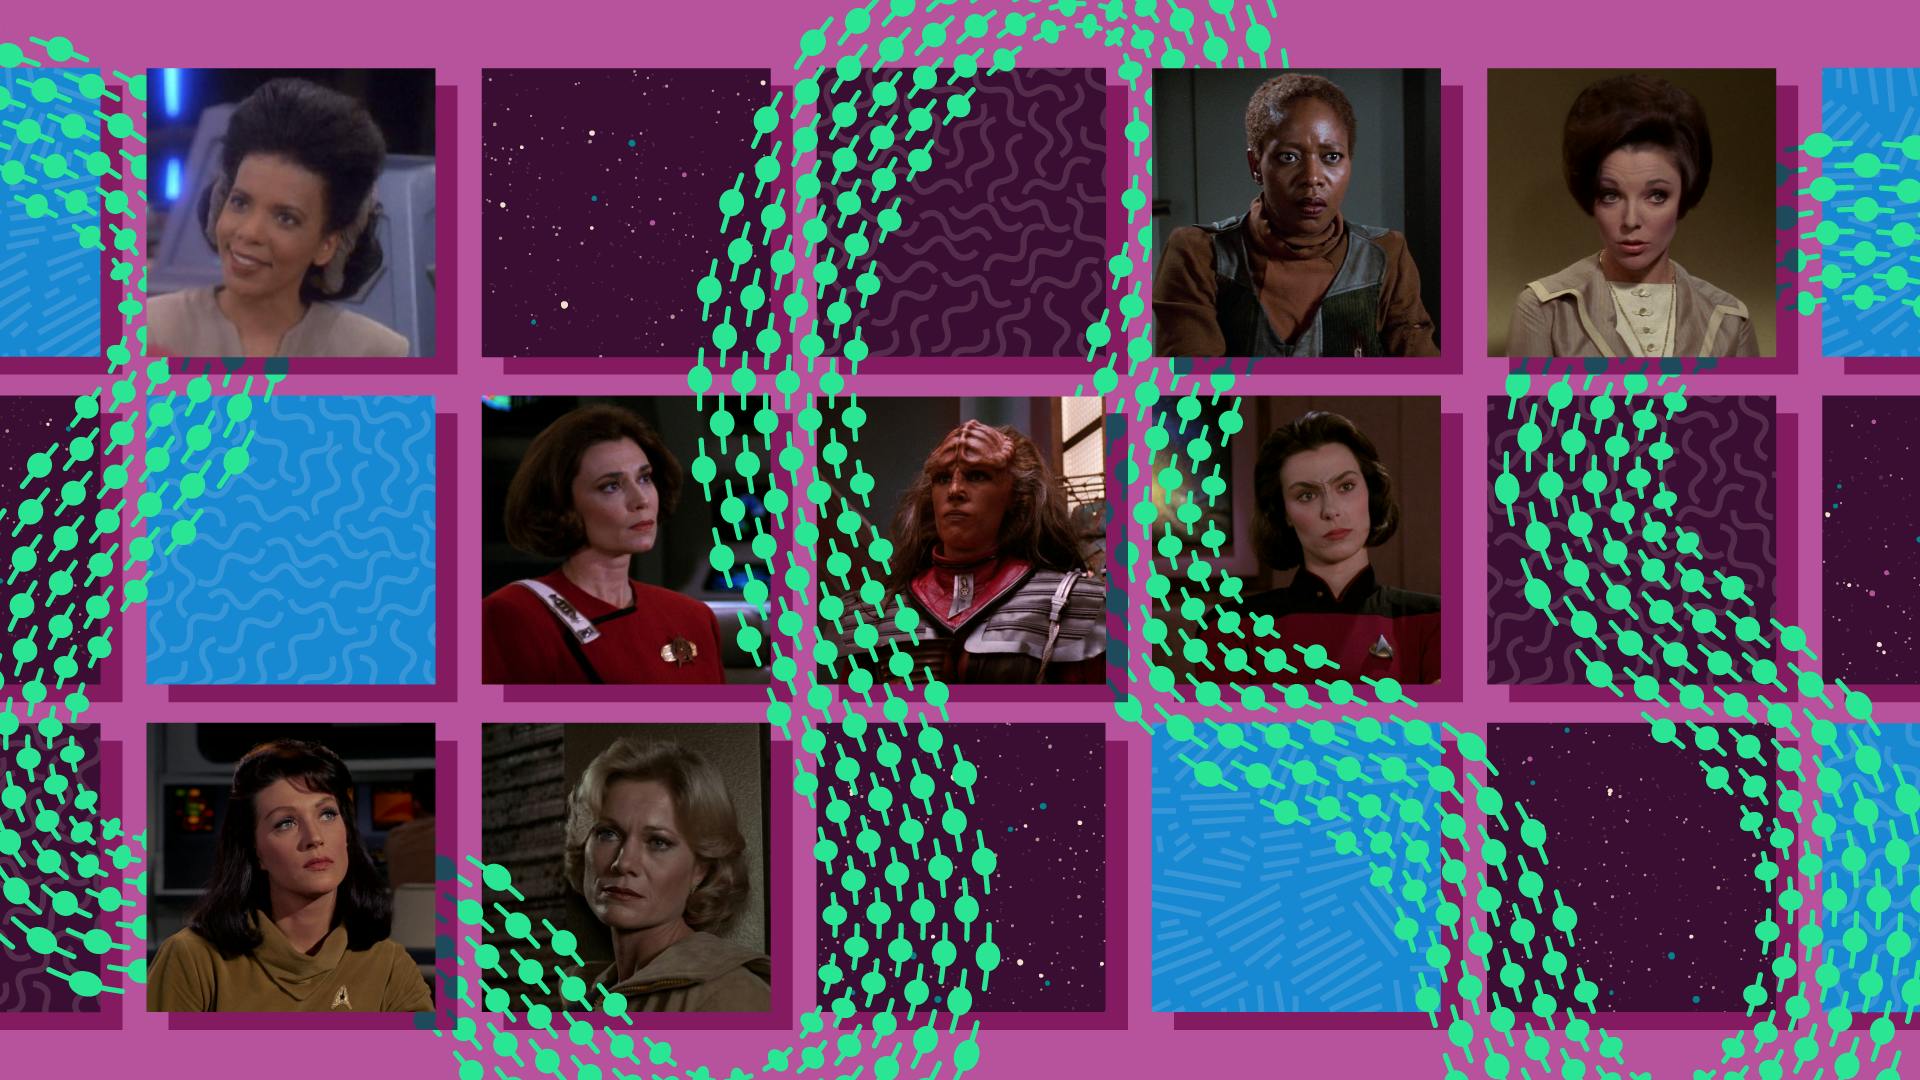 Illustrated collage featuring Star Trek's Number One, Kasidy Yates, Carol Marcus, Ro Laren, Lursa, Edith Keeler, Rachel Garrett, and Lily Sloane